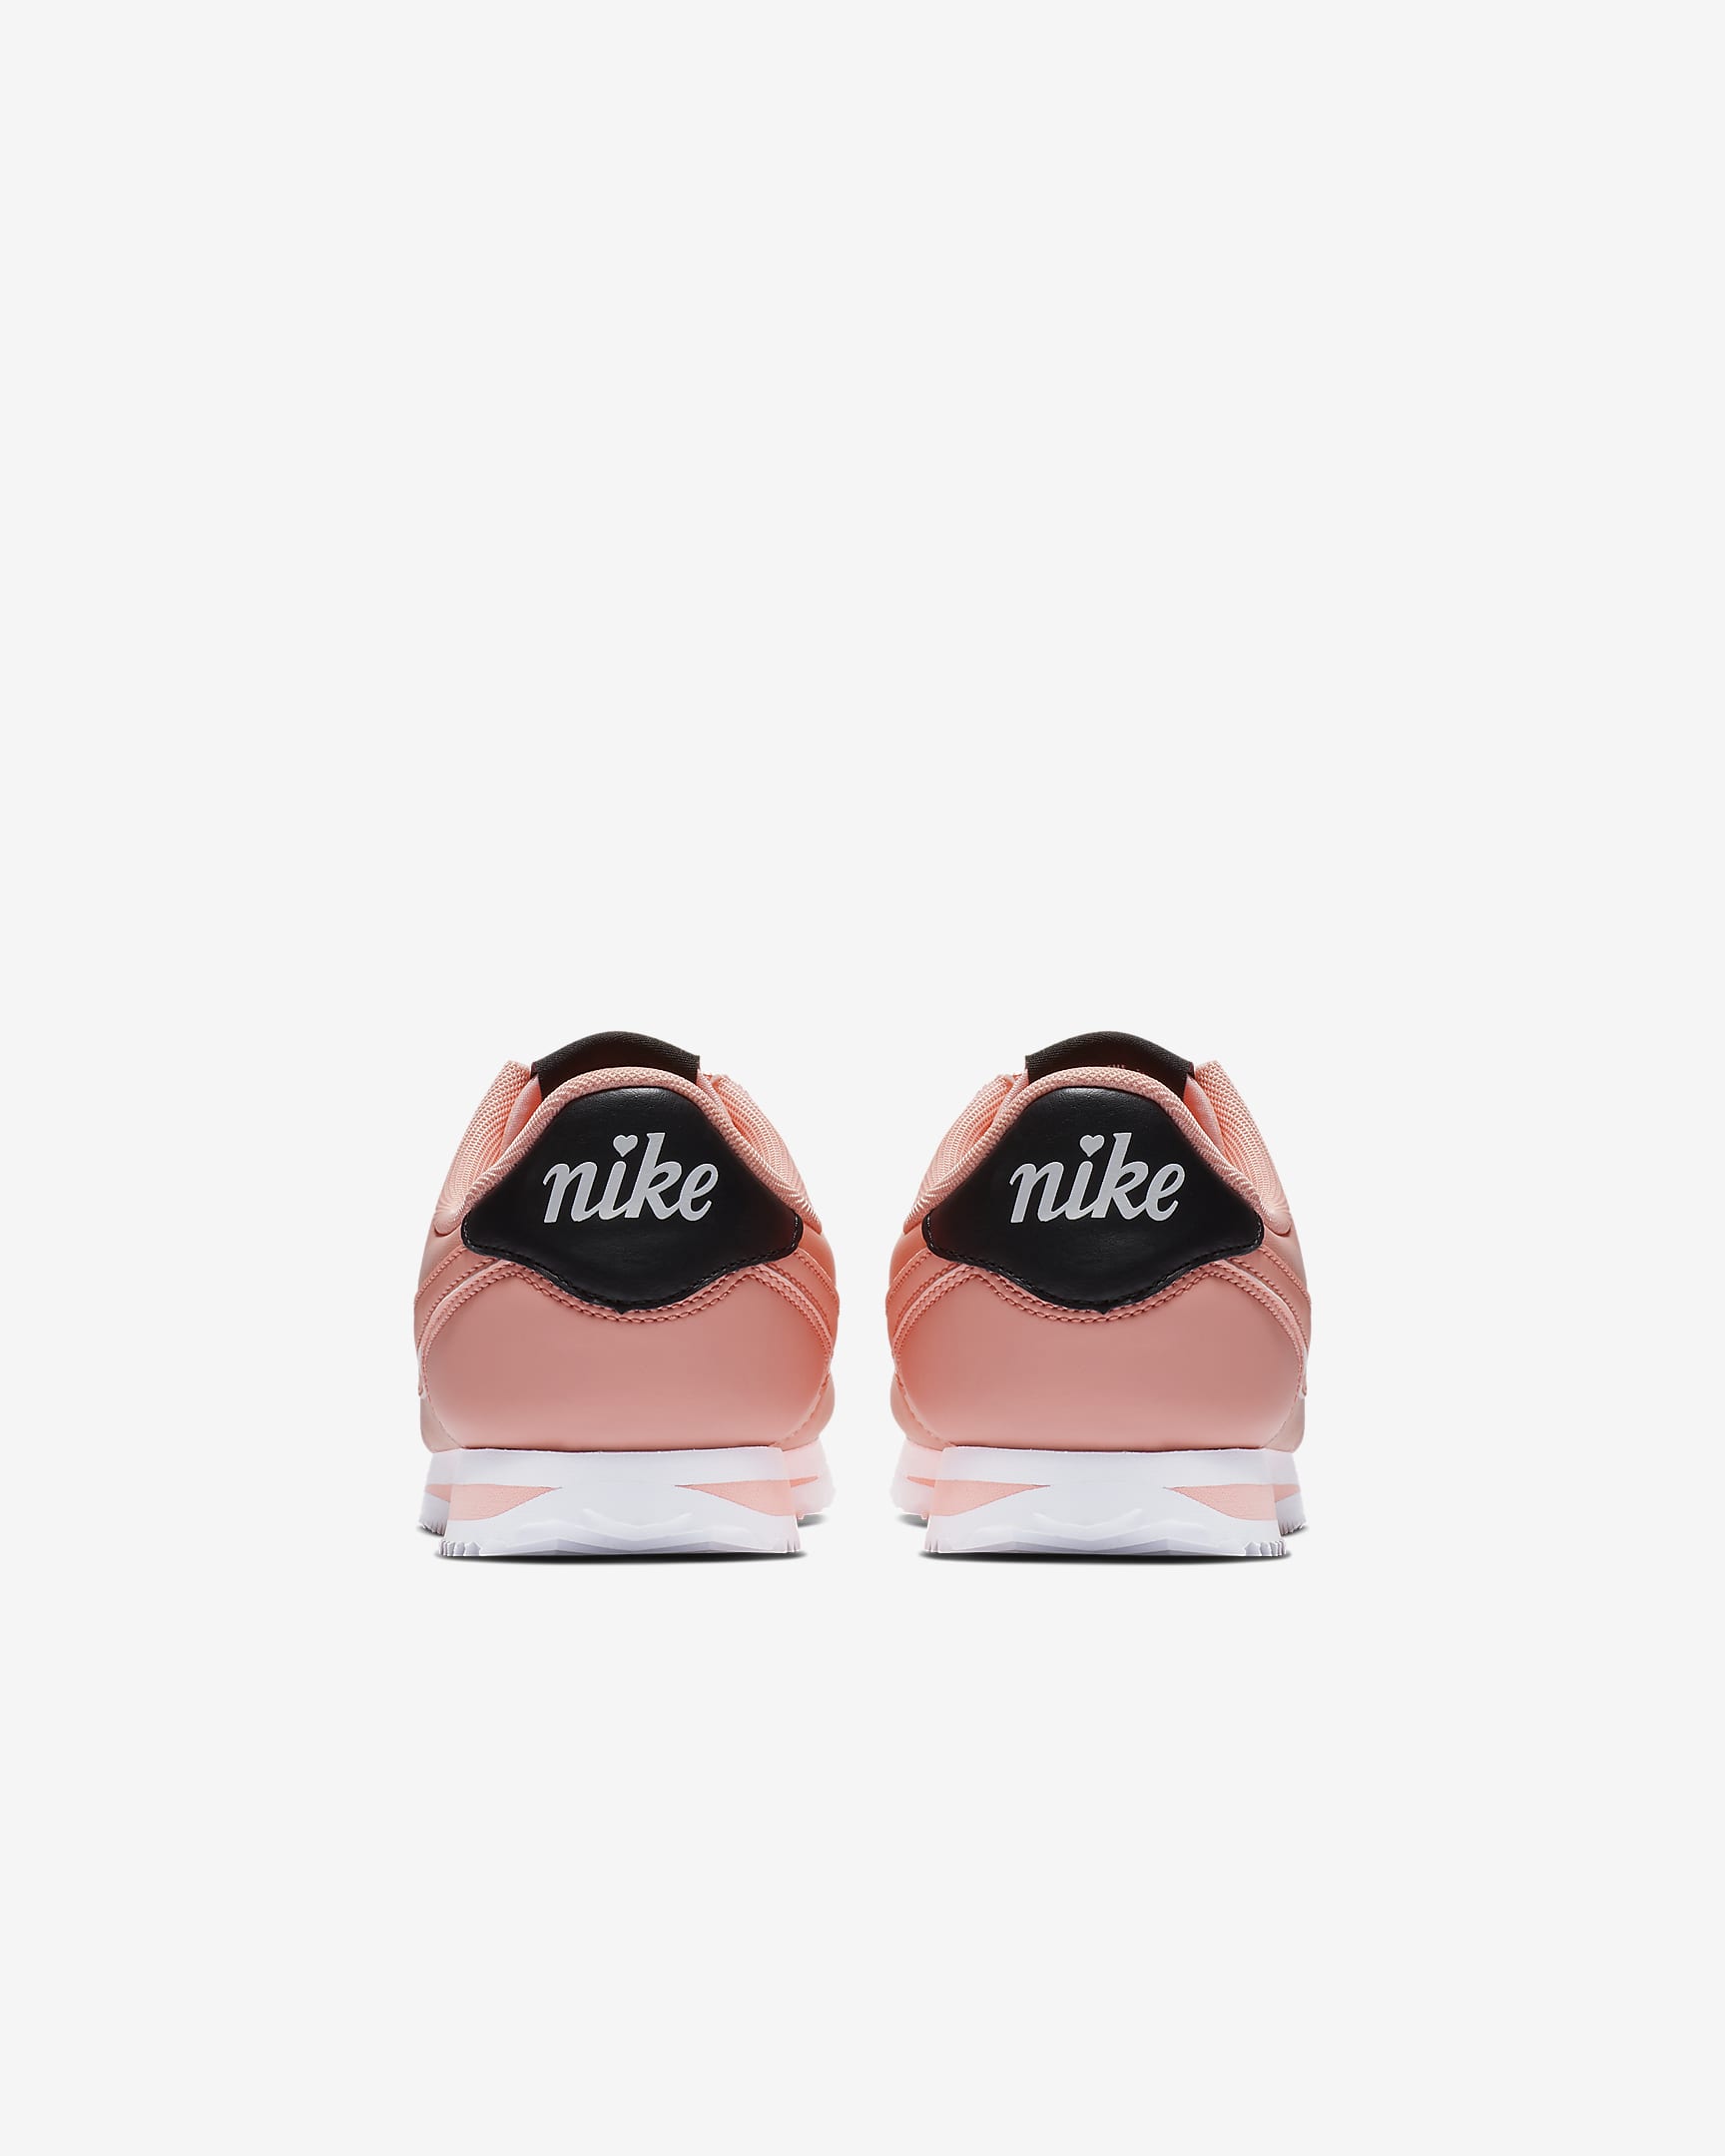 Nike Cortez Basic TXT VDAY Older Kids' Shoe. Nike HR